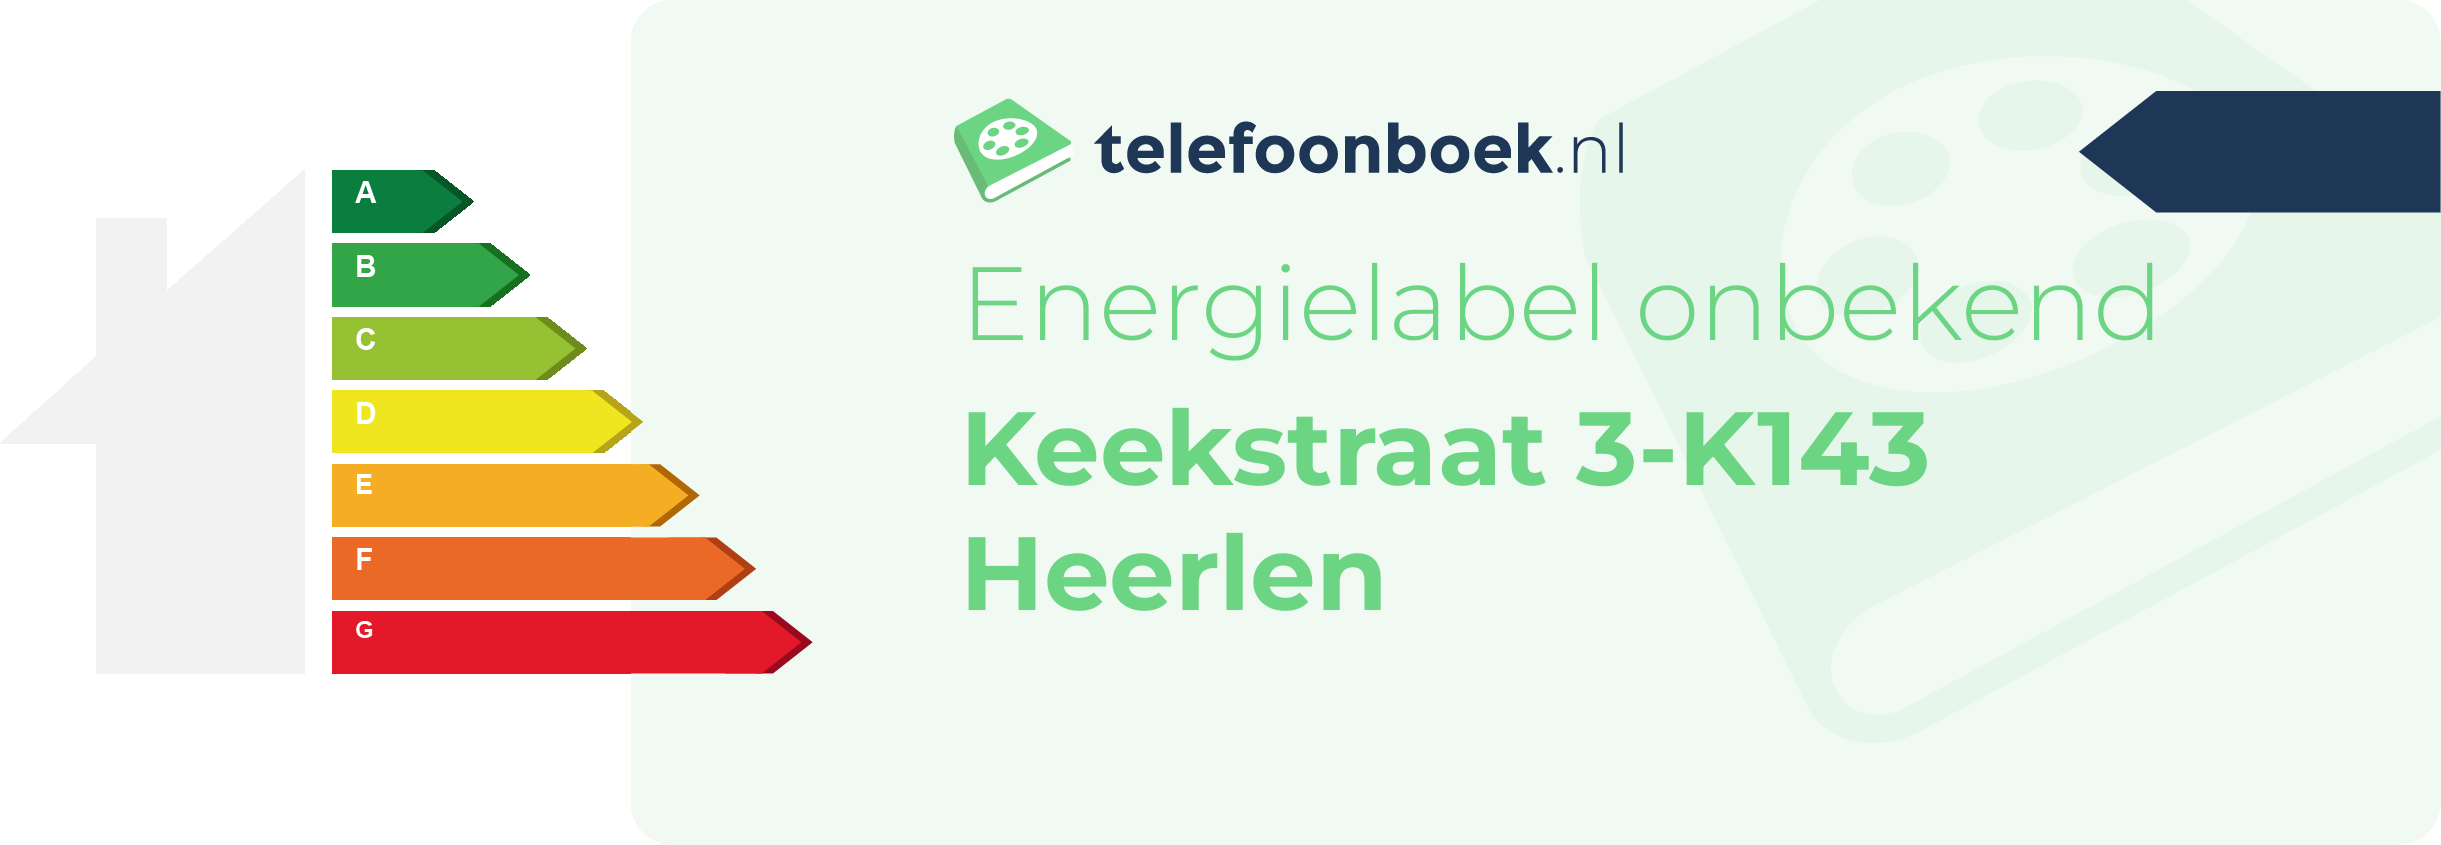 Energielabel Keekstraat 3-K143 Heerlen